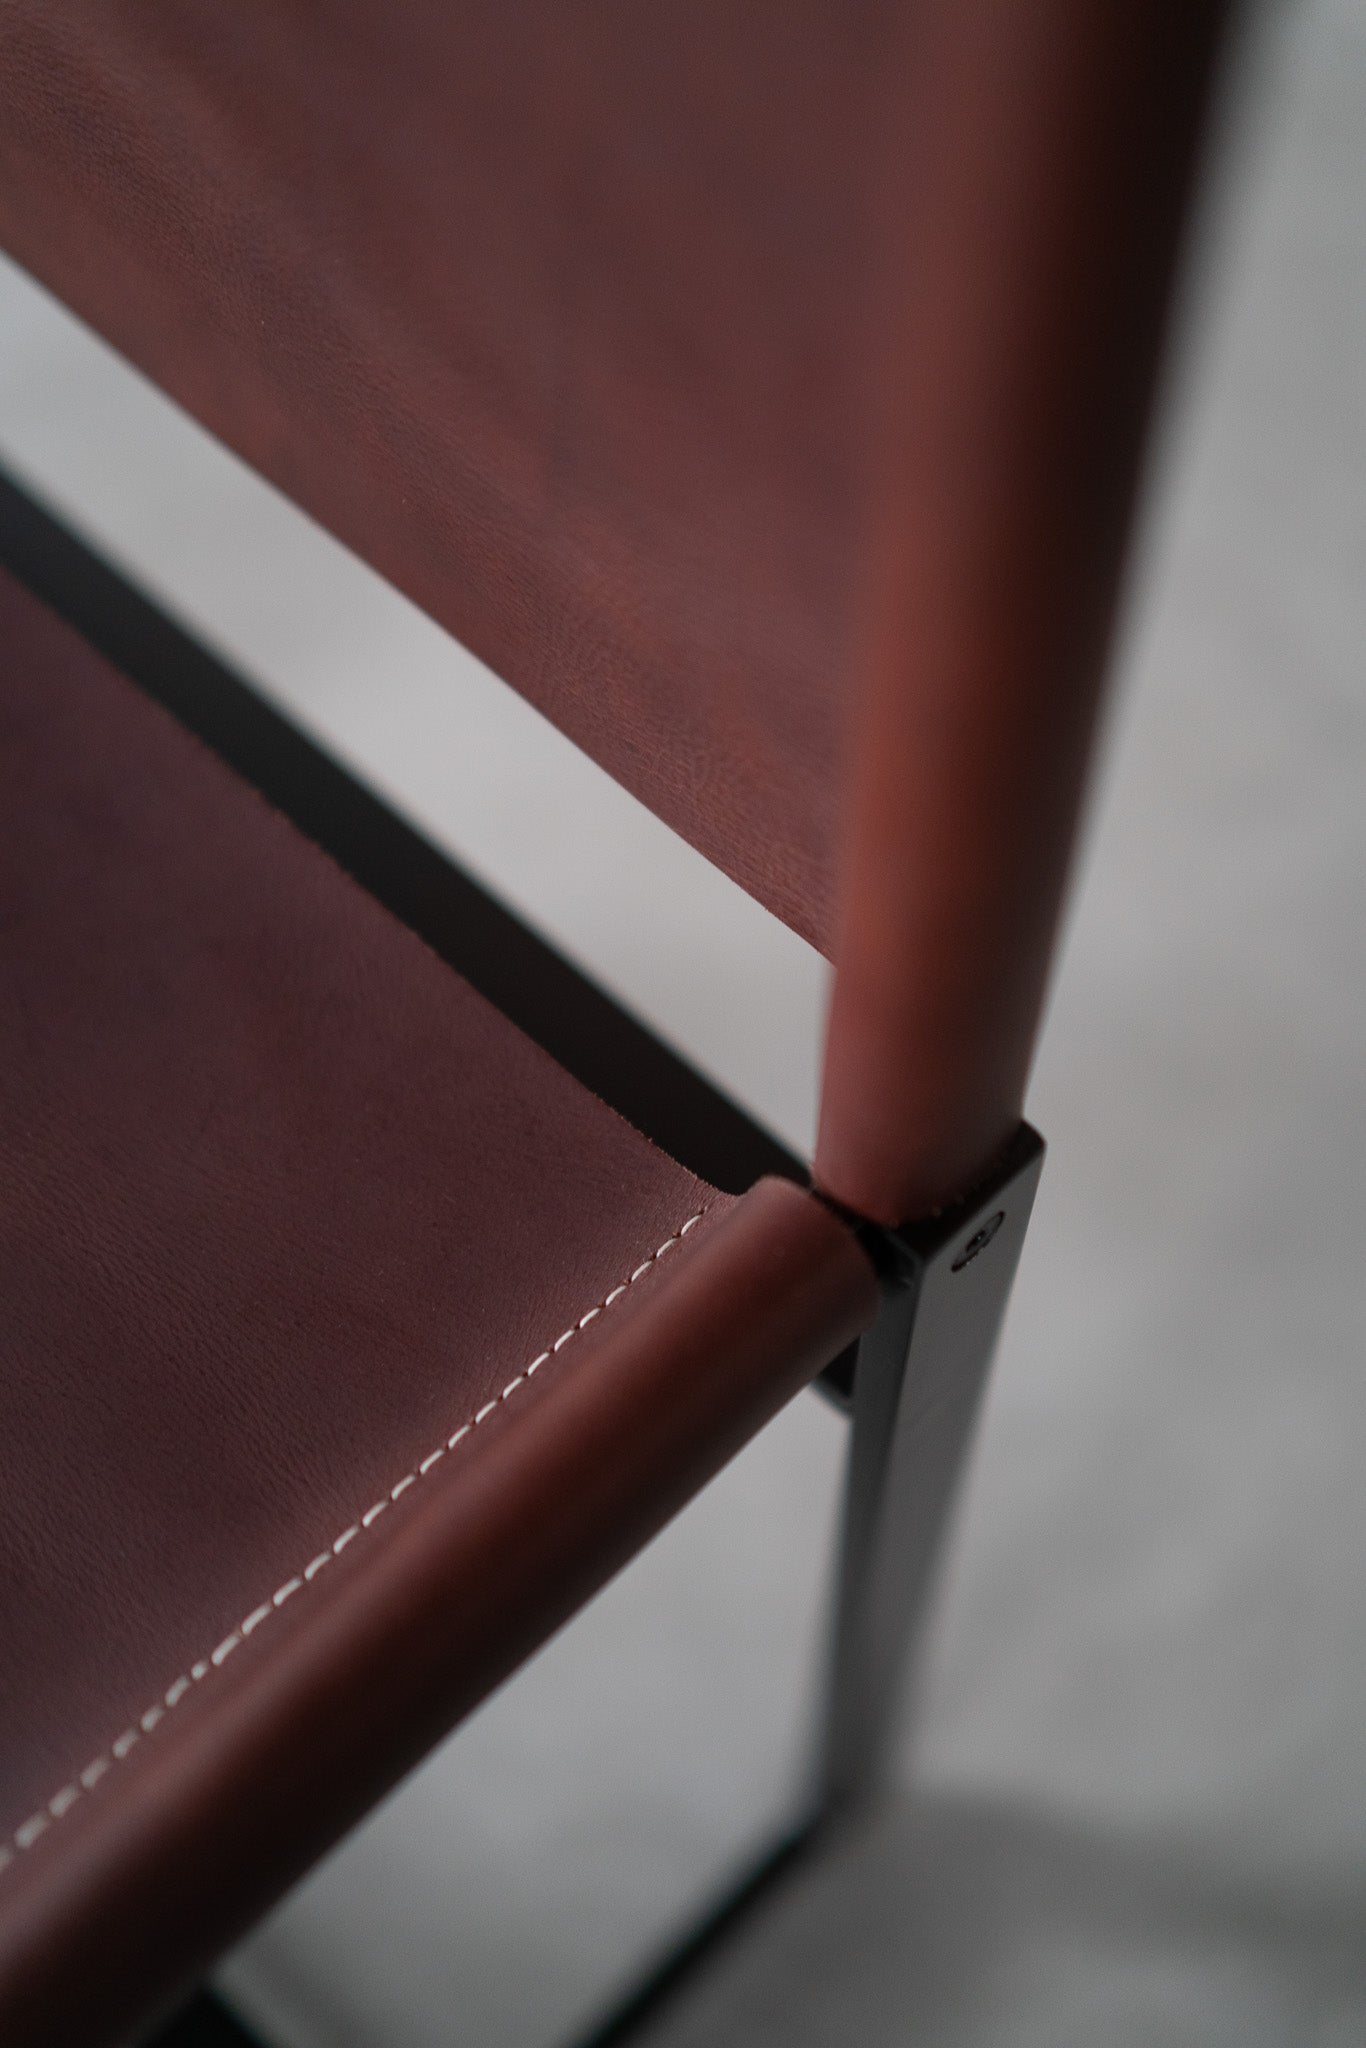 Latigo lounge chair - close up on leather 